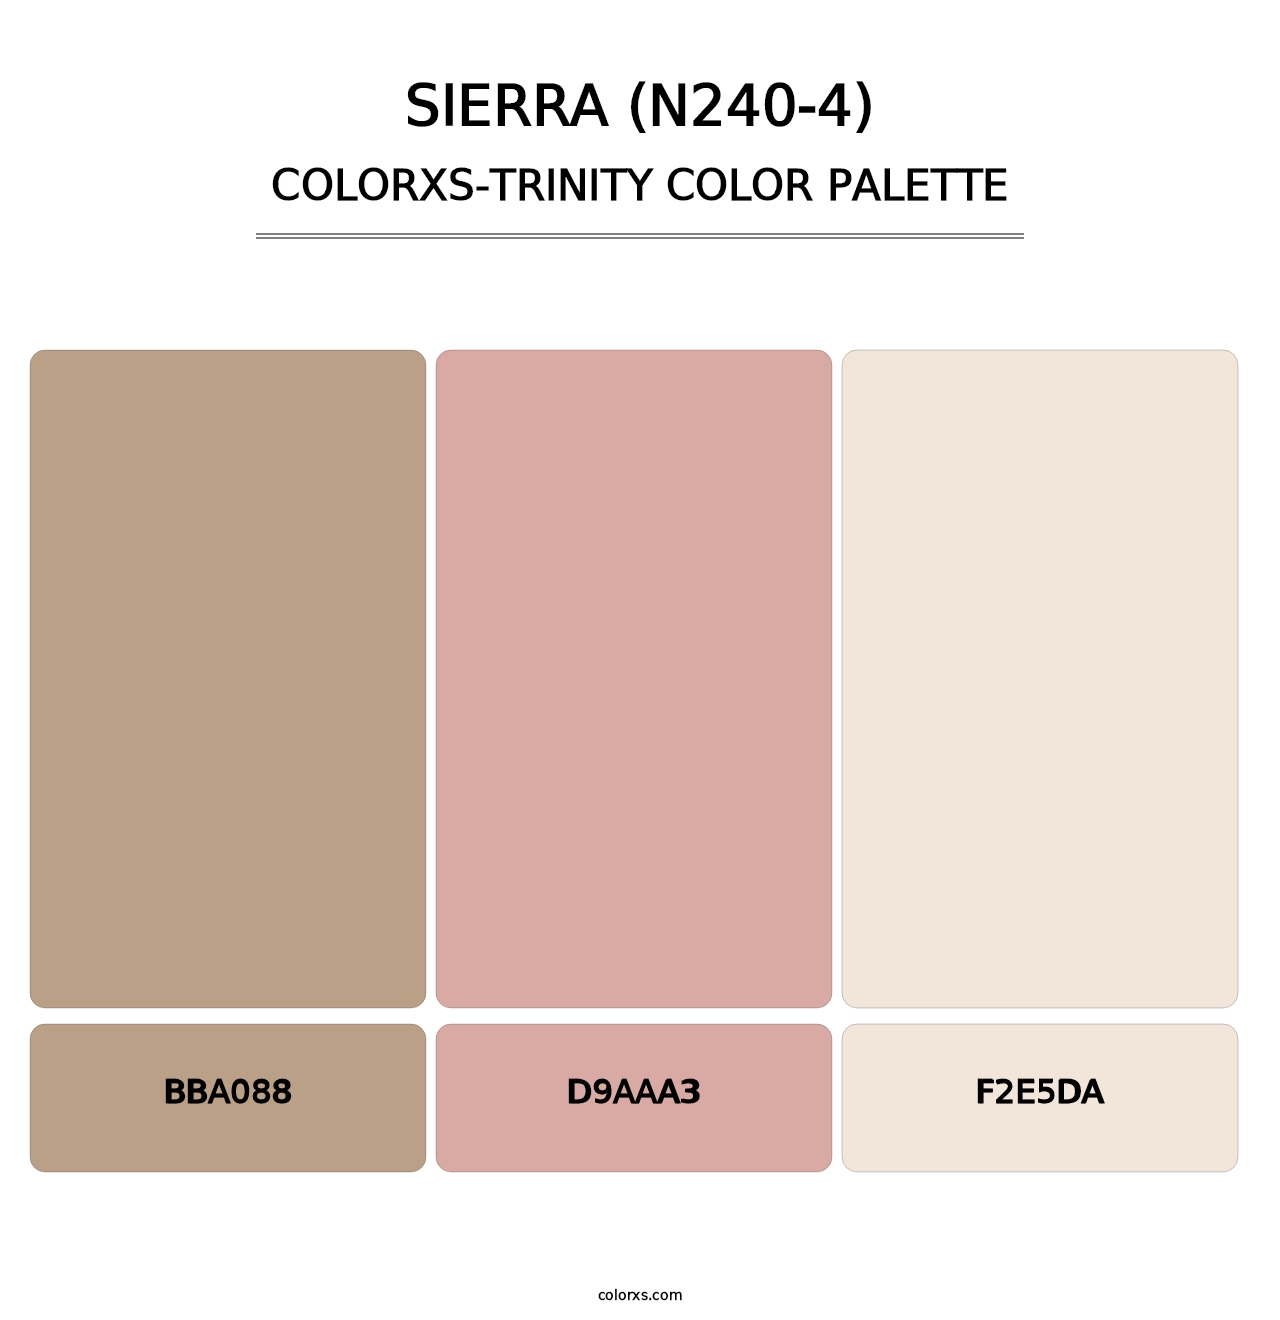 Sierra (N240-4) - Colorxs Trinity Palette